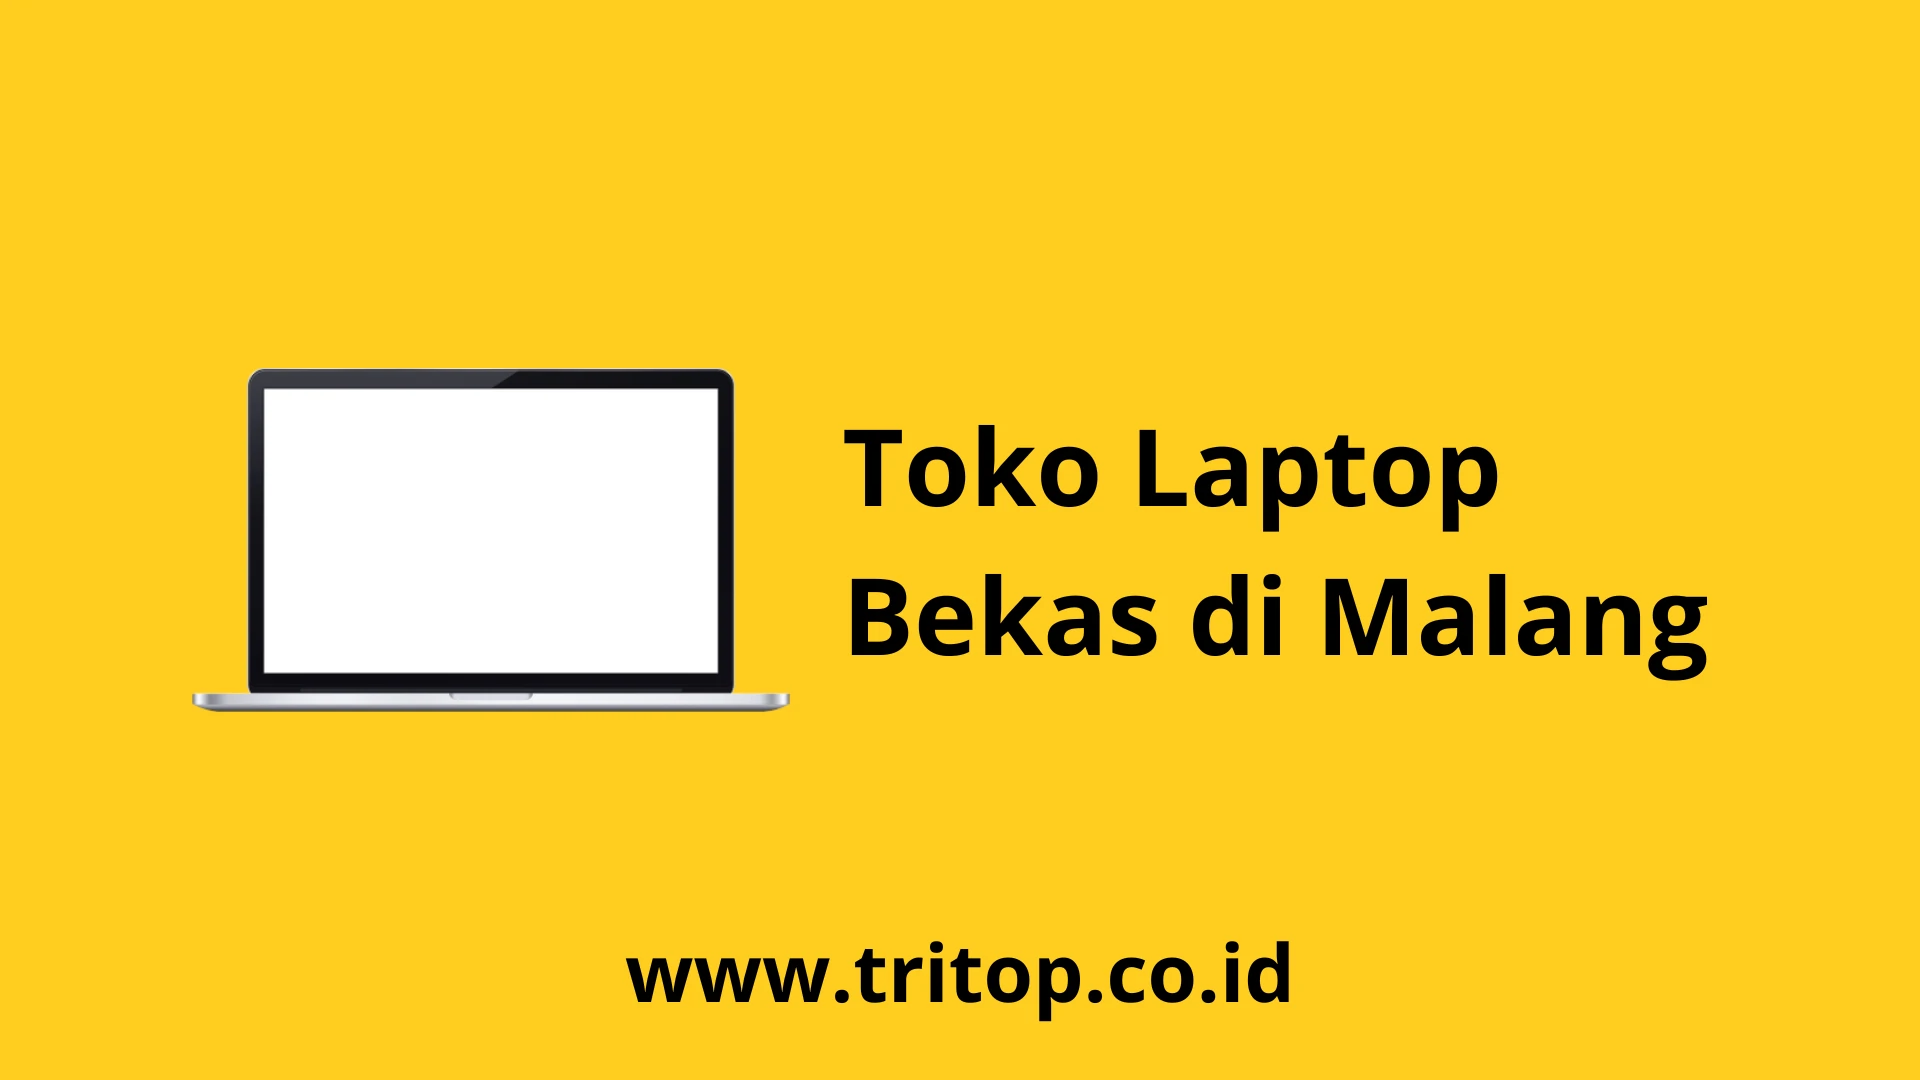 Toko Laptop Bekas di Malang www.tritop.co.id